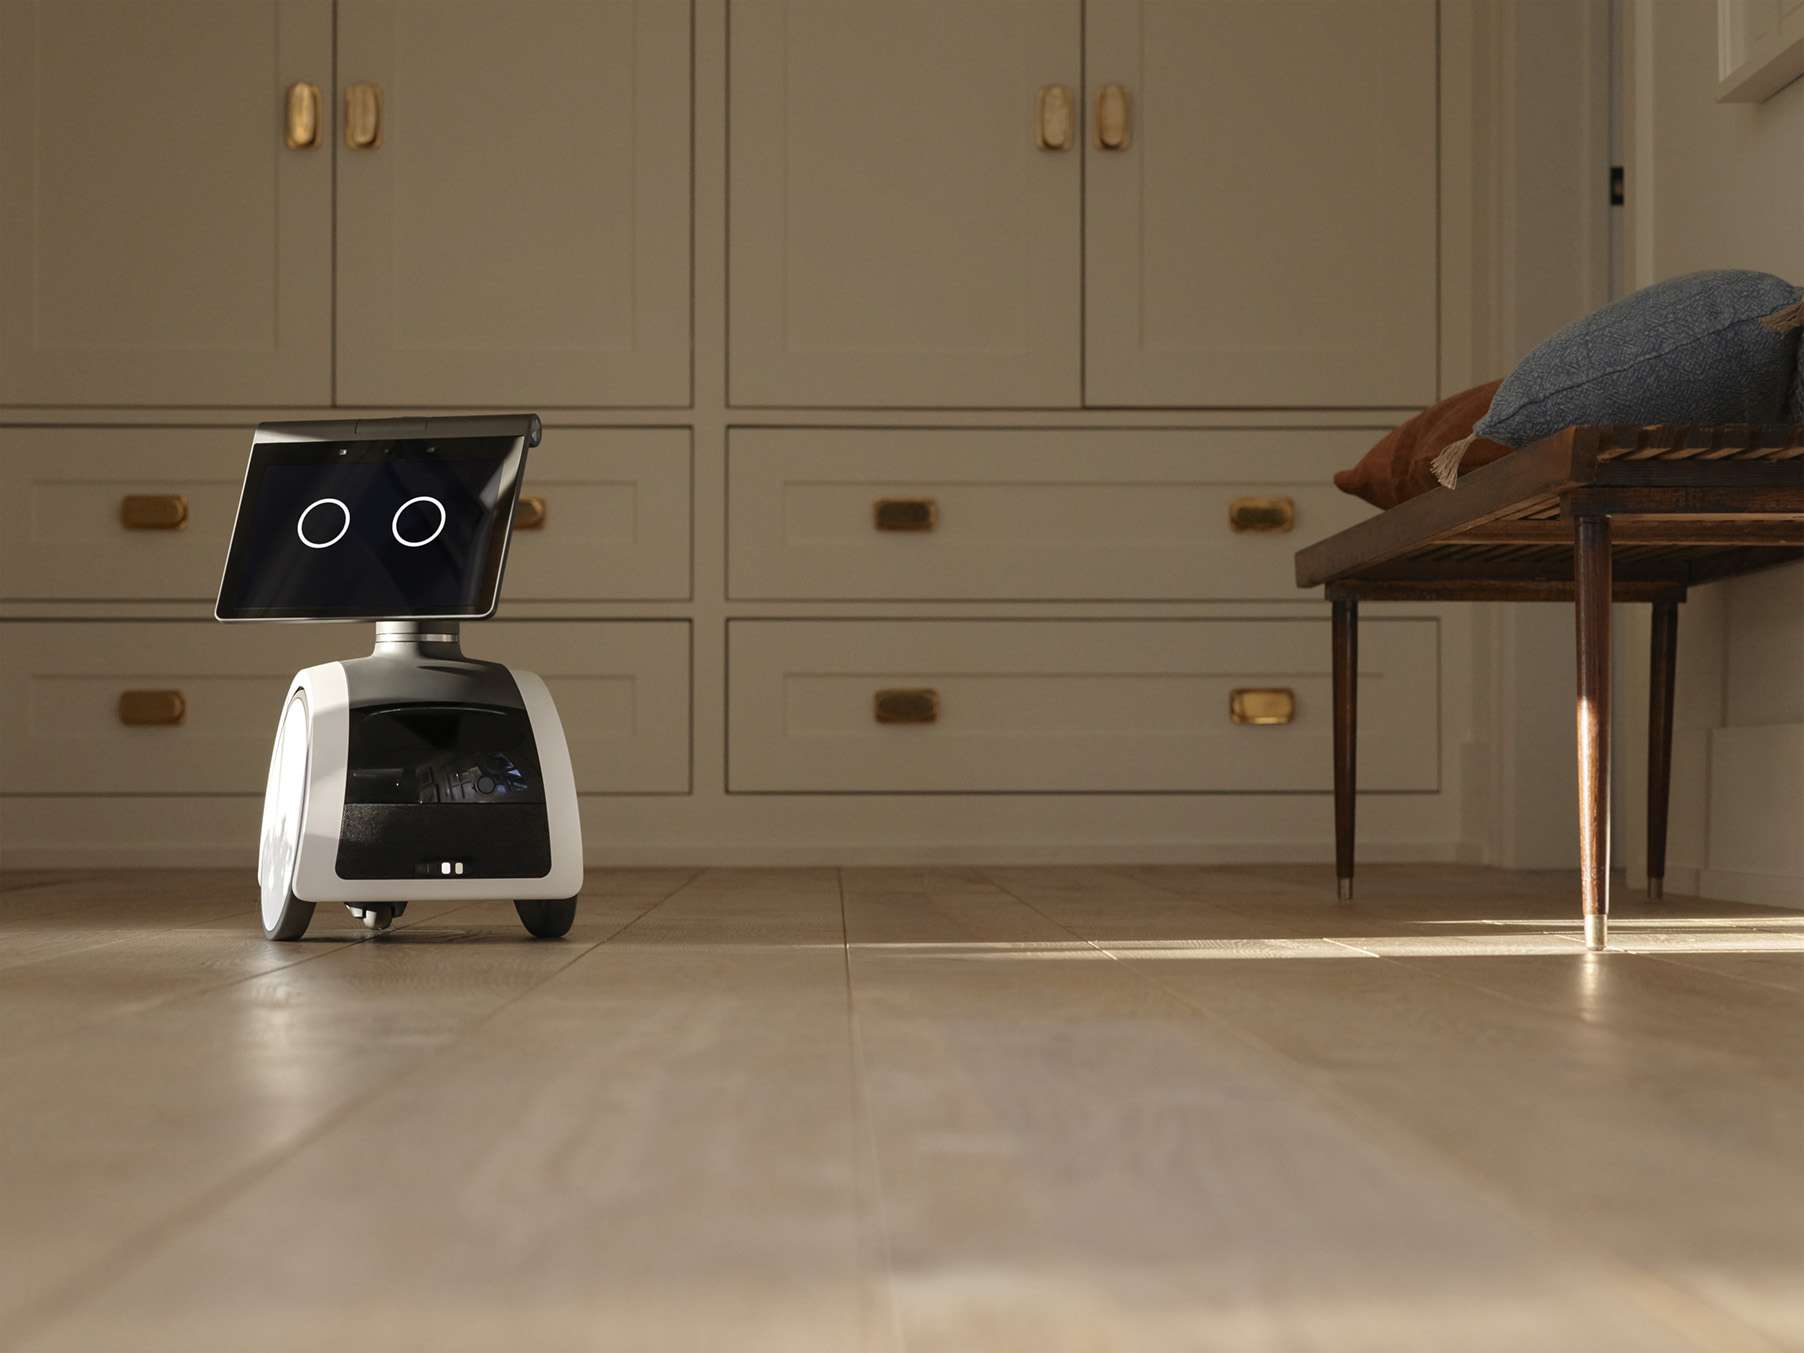 Amazon Astro -robotti partioi talossa.